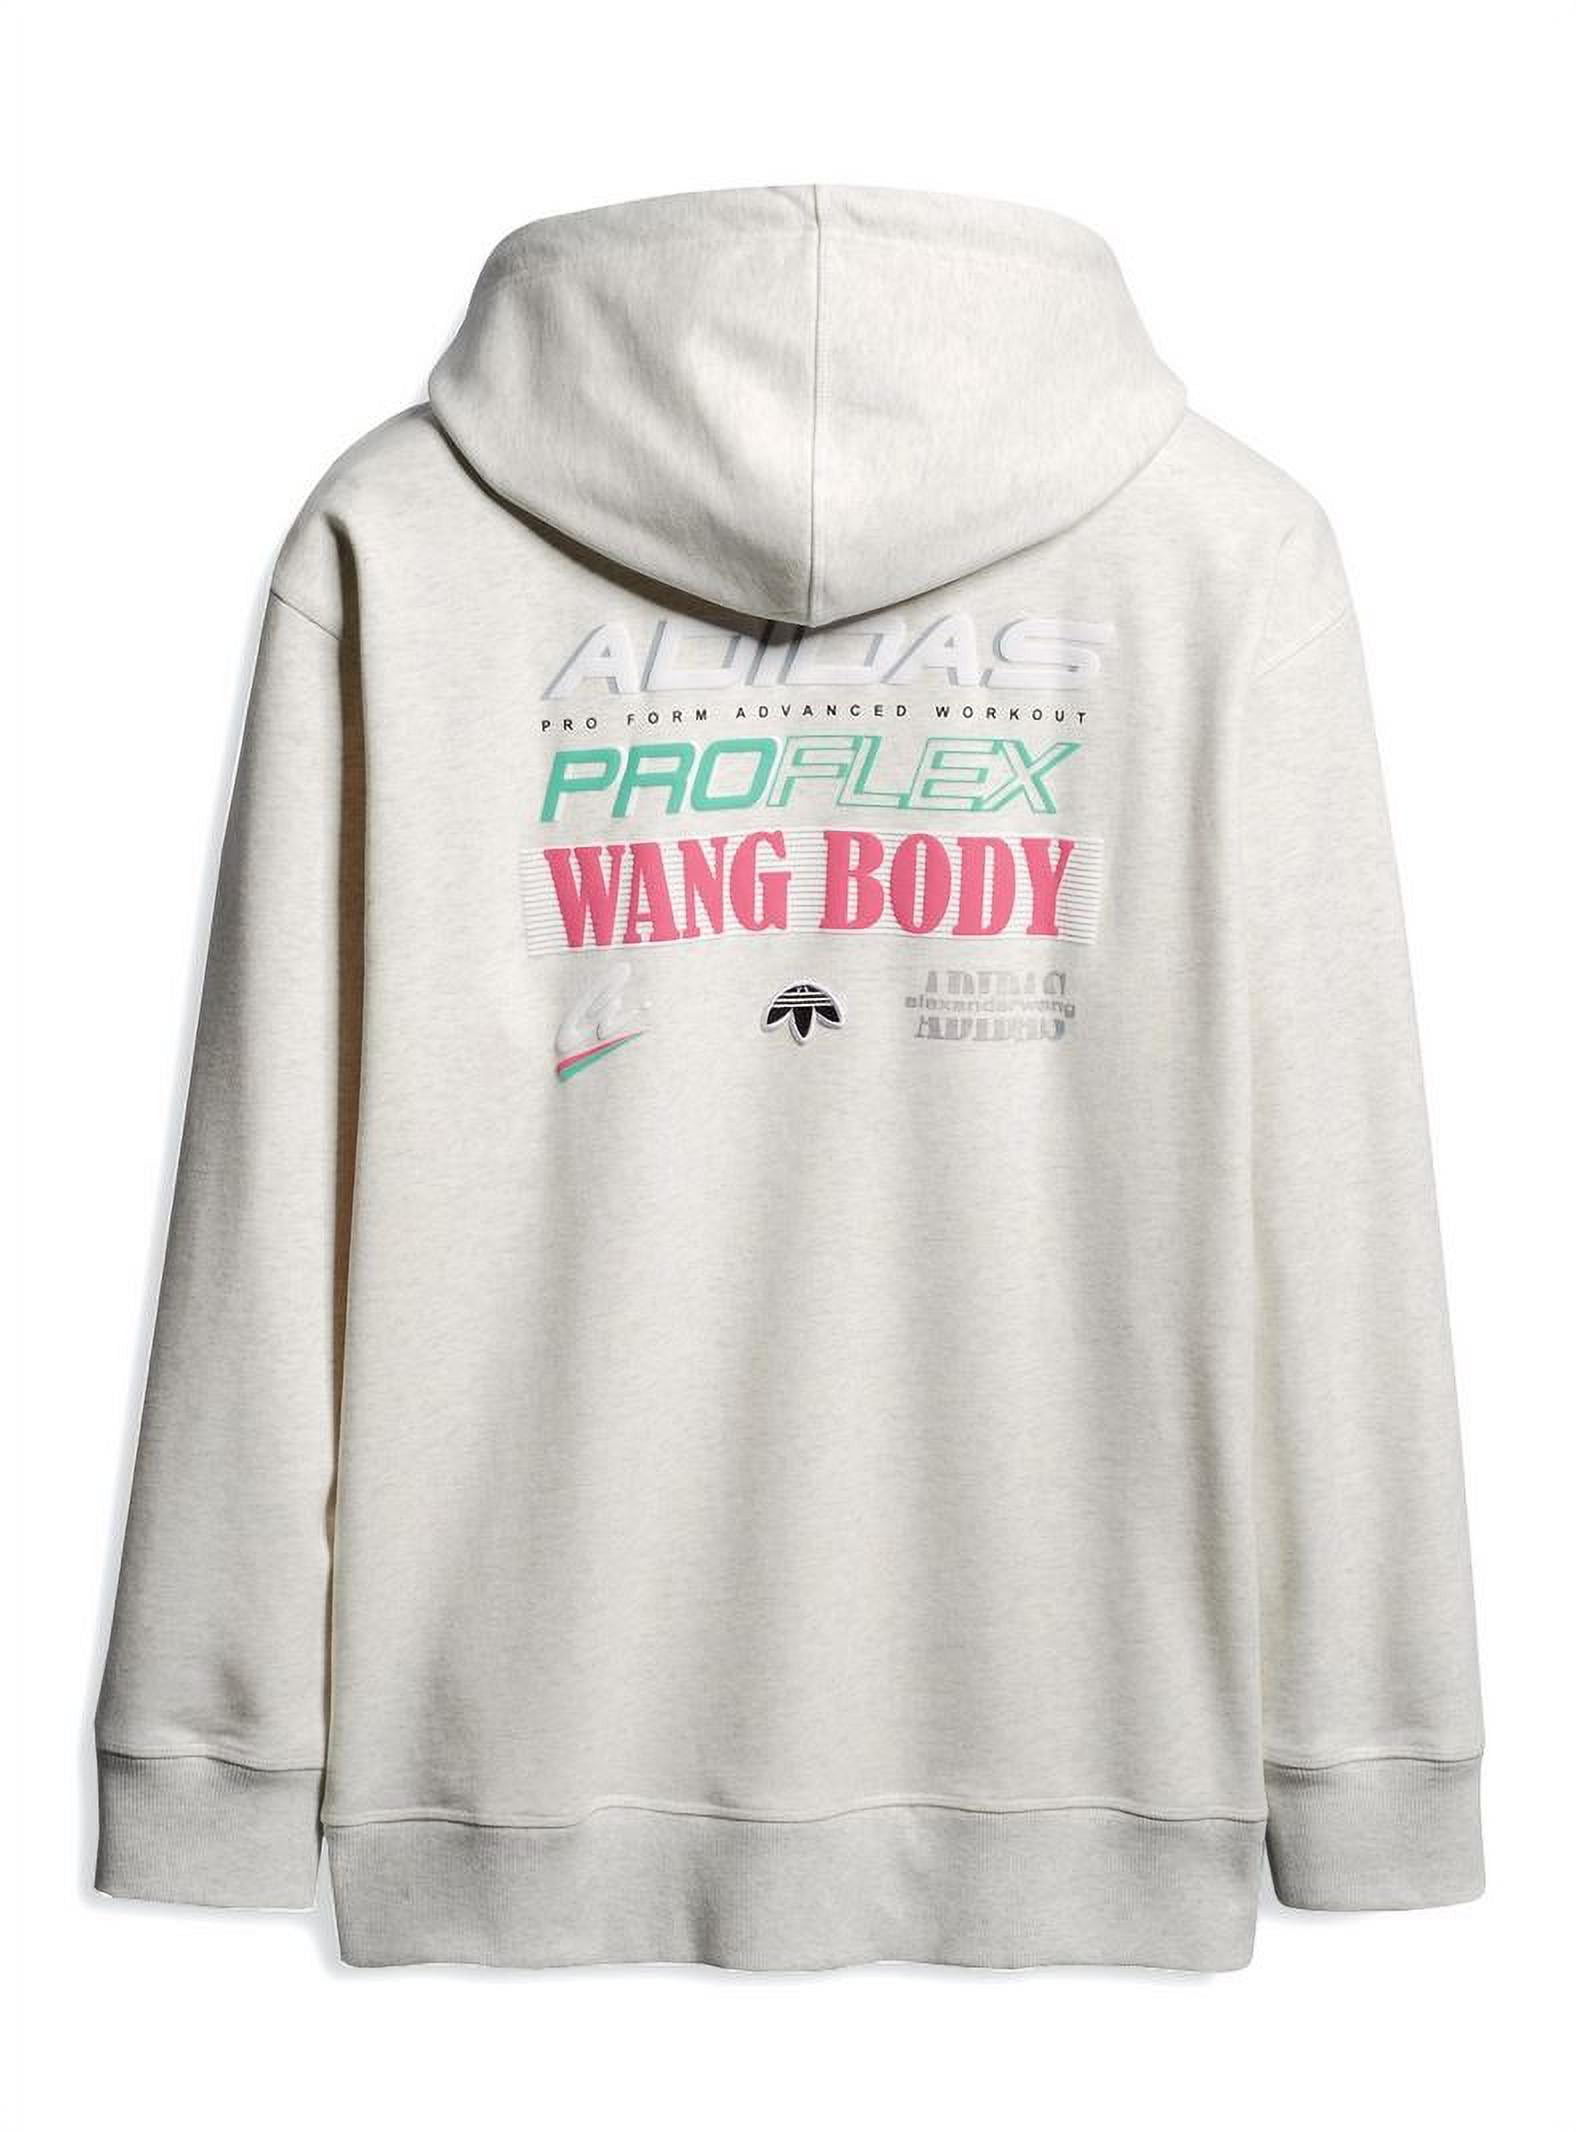 Adidas x Alexander Wang Graphic Hoodie, Medium, Heather/White/Pink